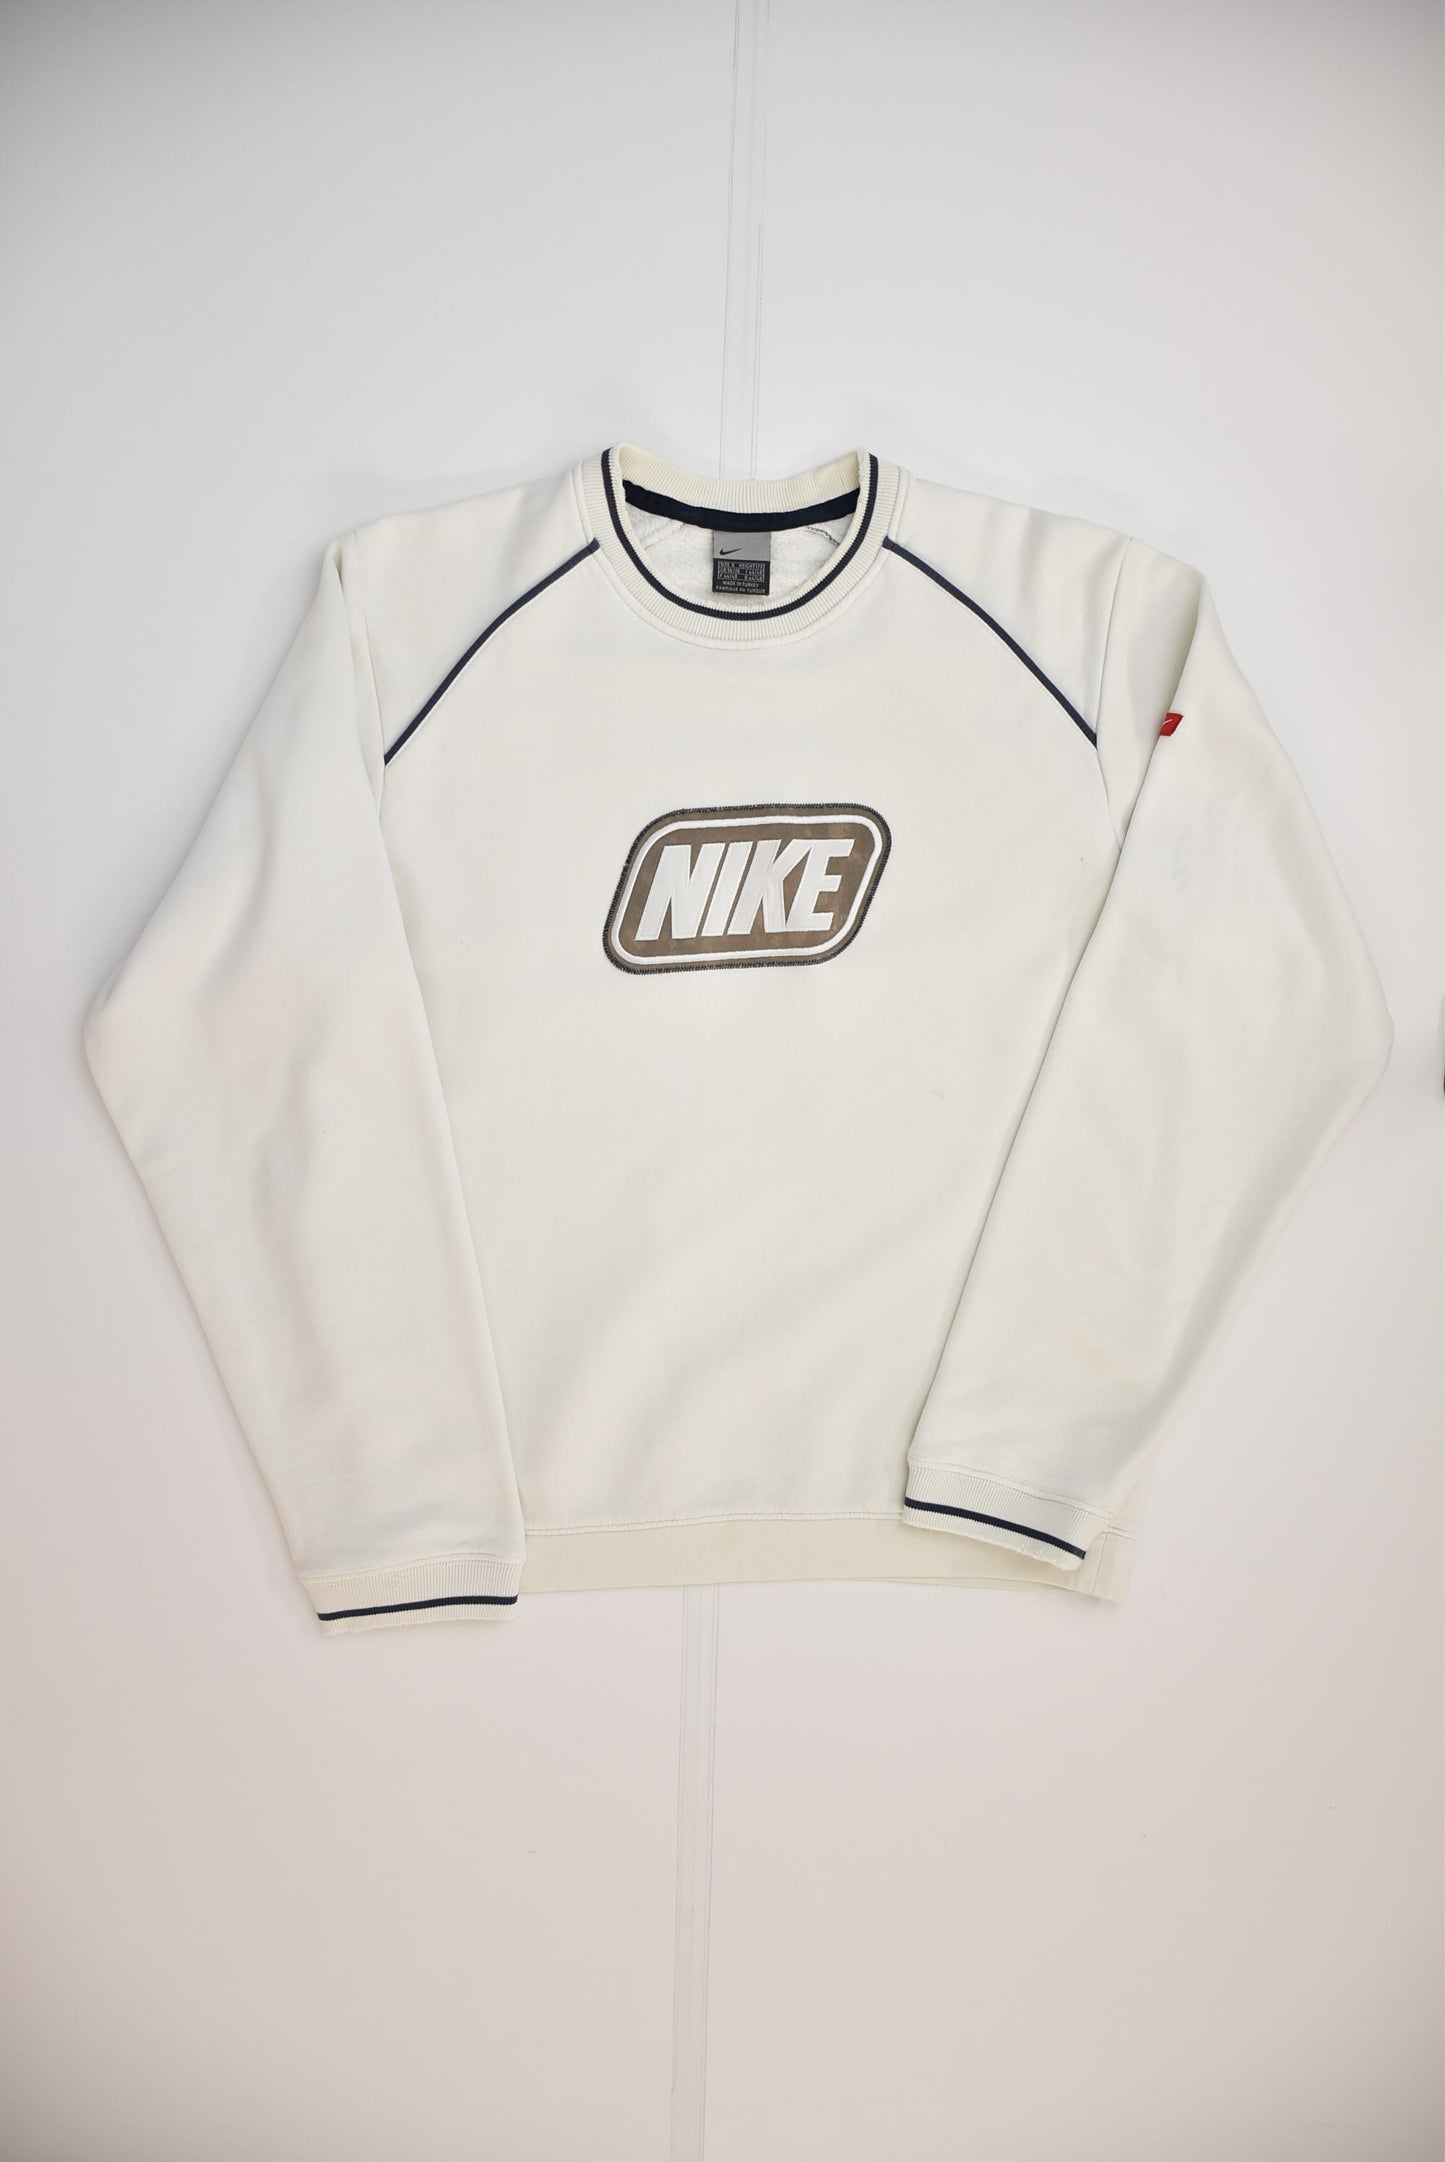 00s Nike Spellout Sweatshirt (S)